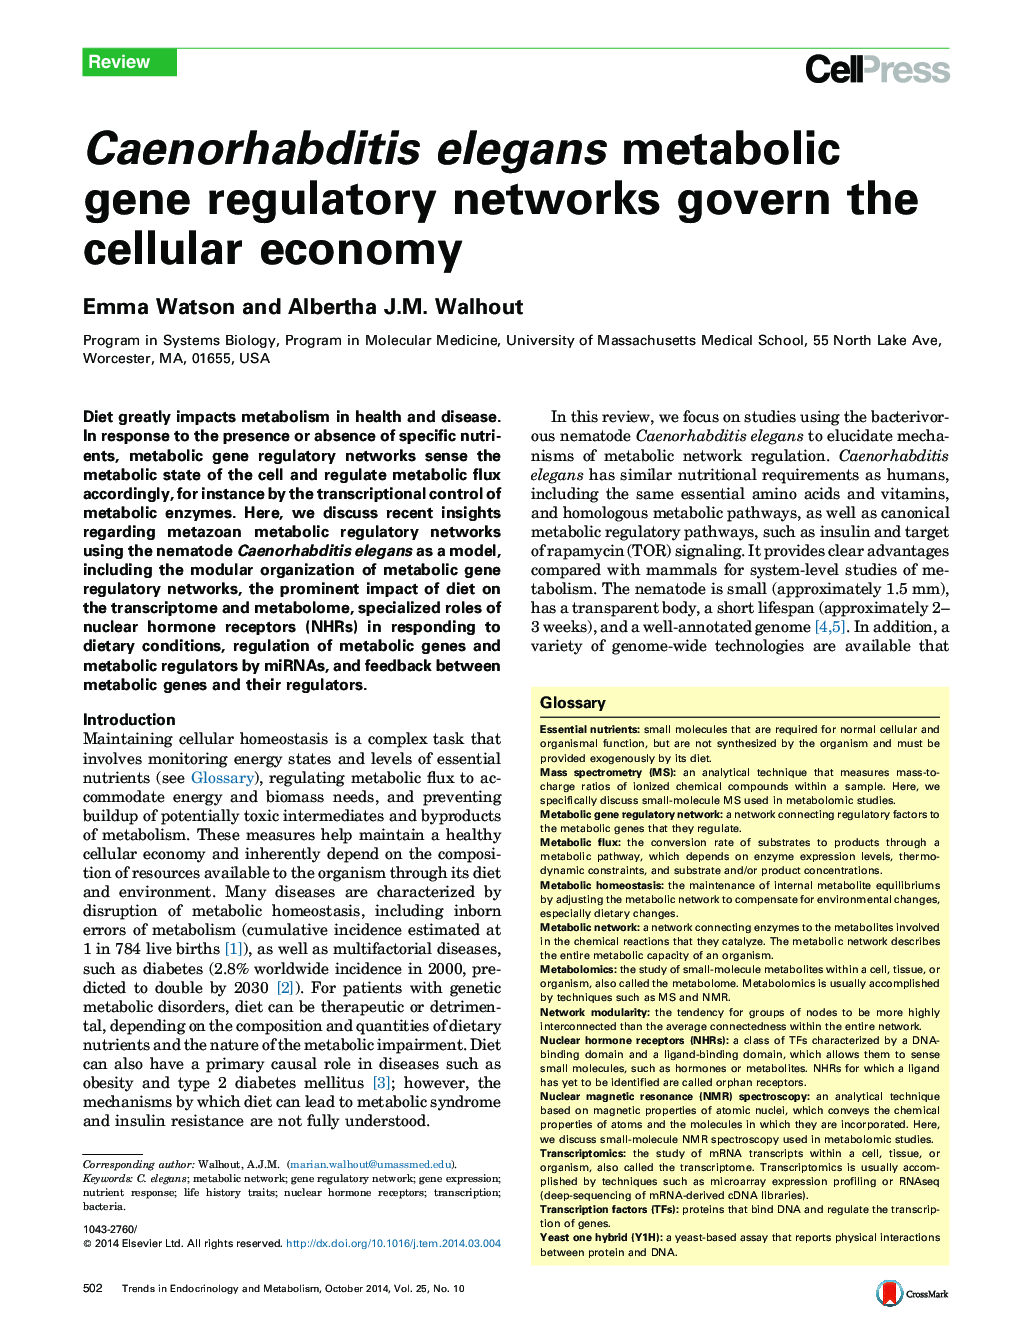 Caenorhabditis elegans metabolic gene regulatory networks govern the cellular economy